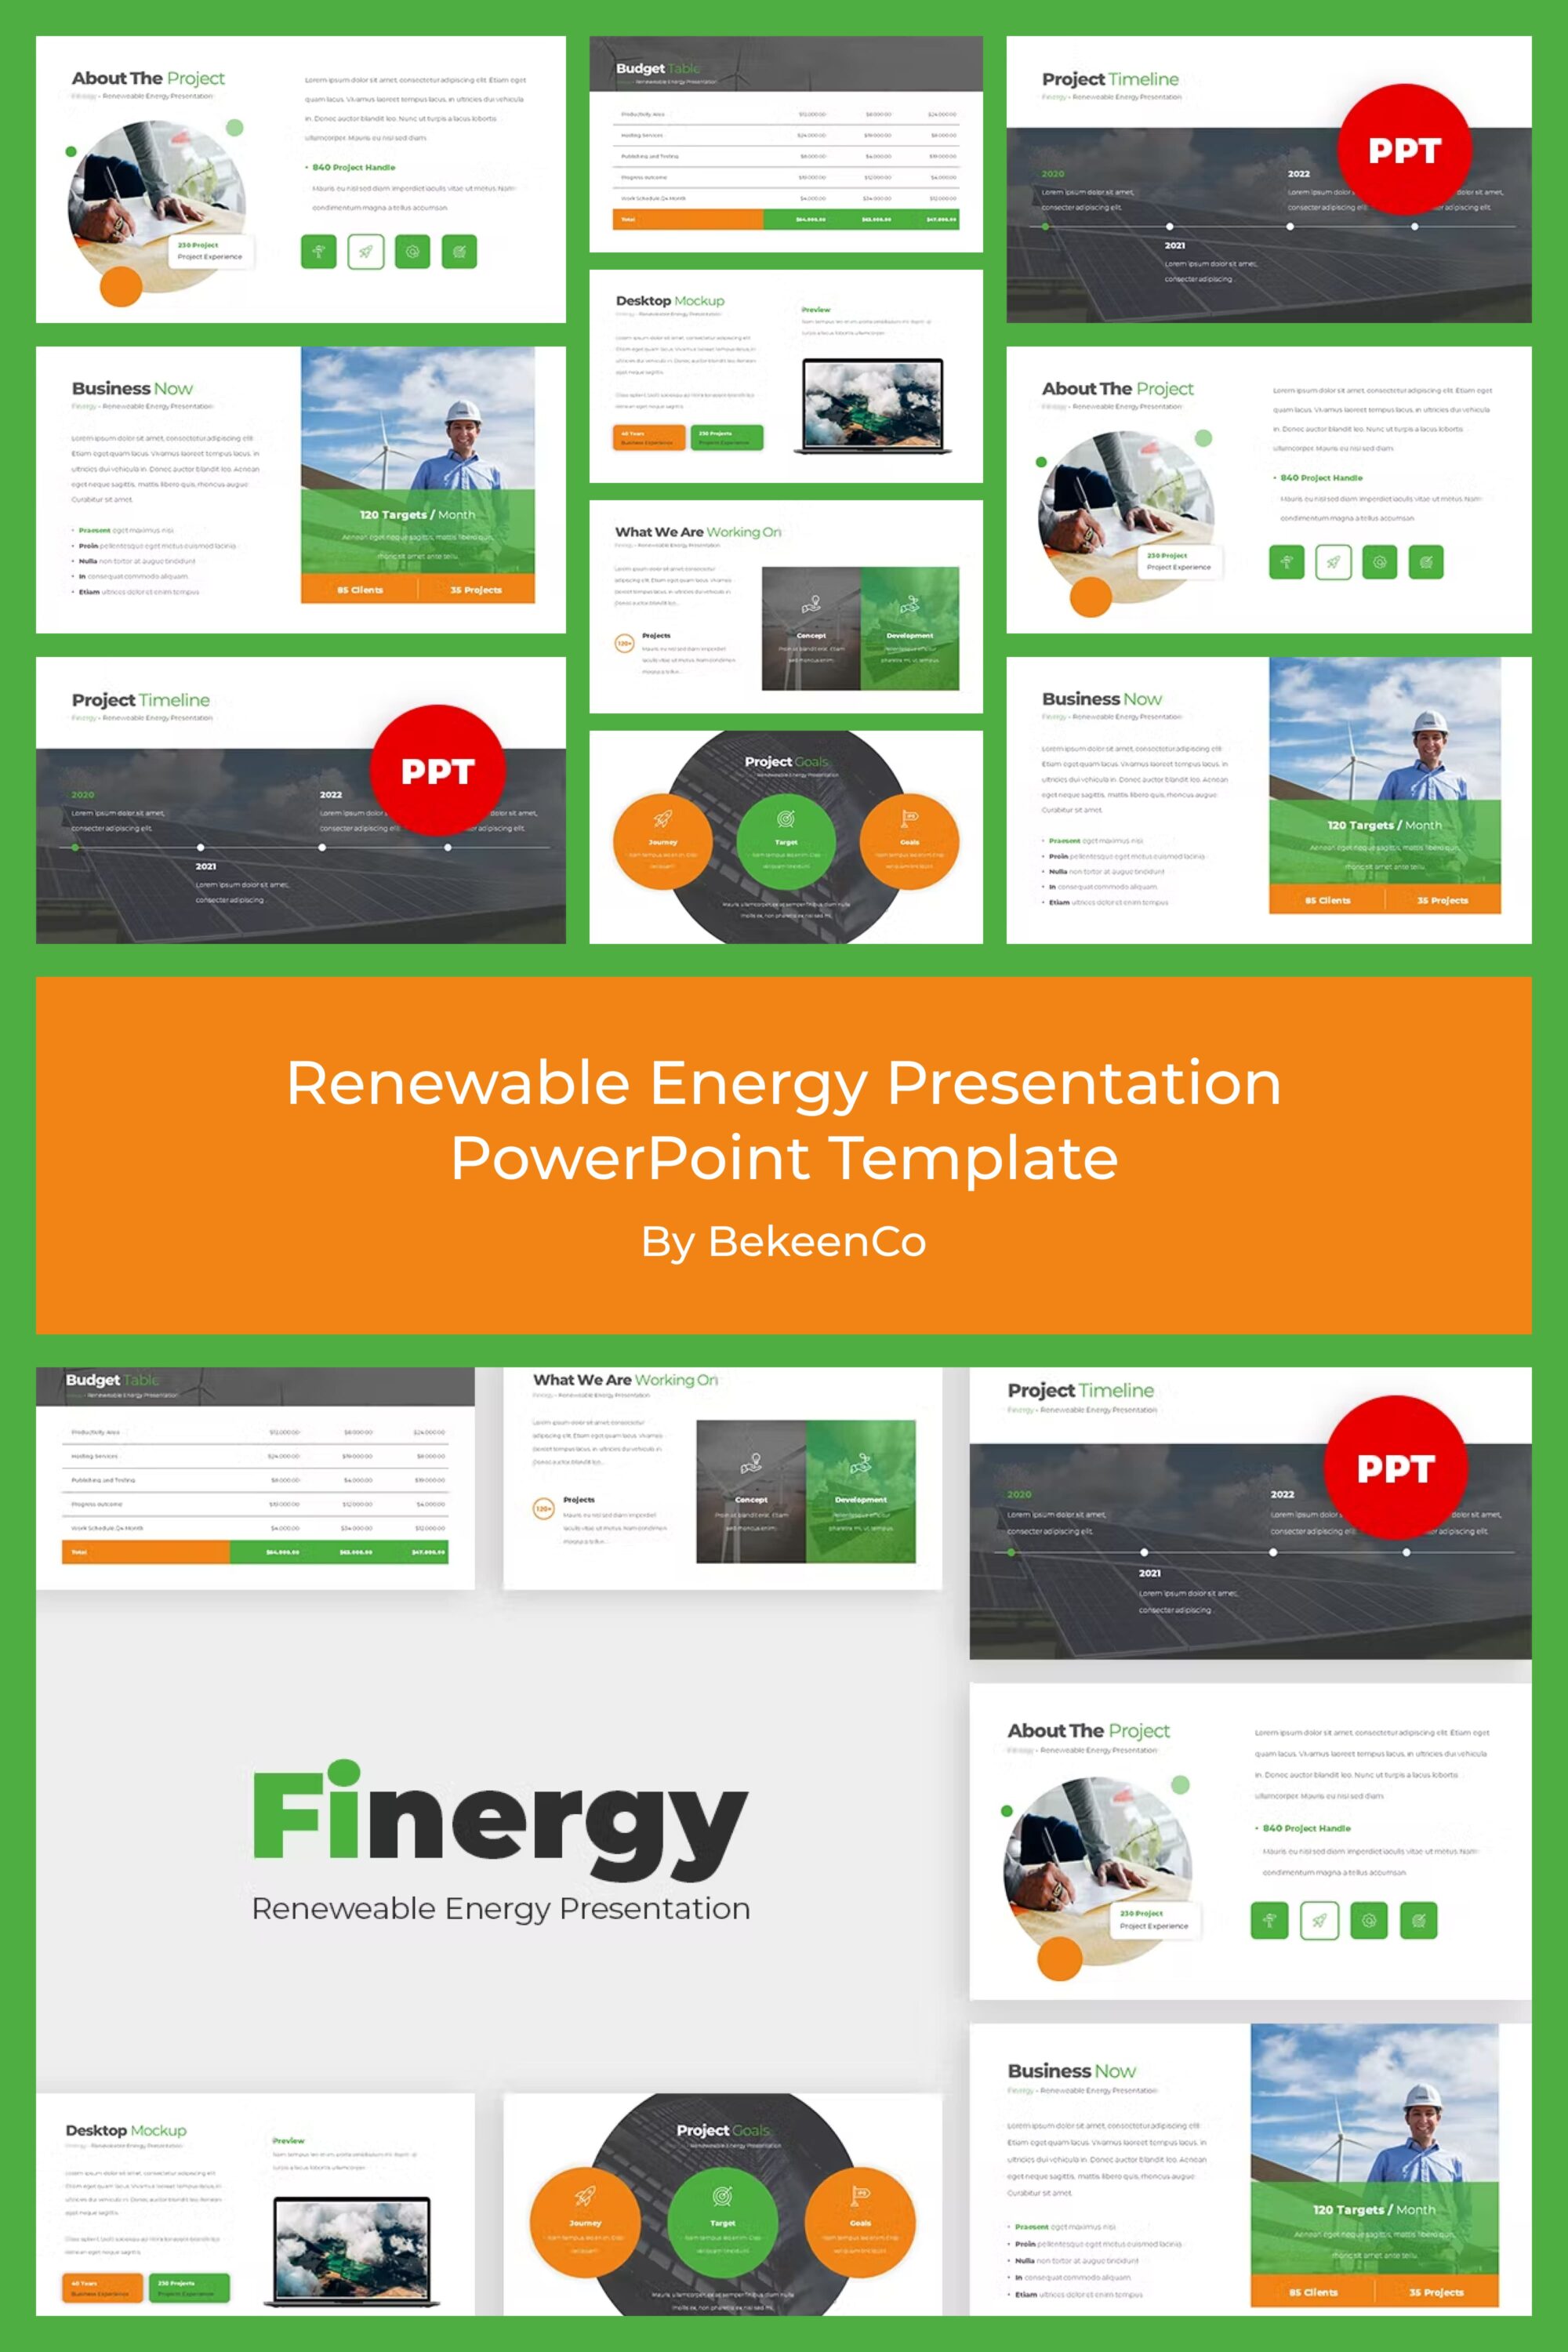 Finergy Renewable Energy Presentation Template - pinterest image preview.